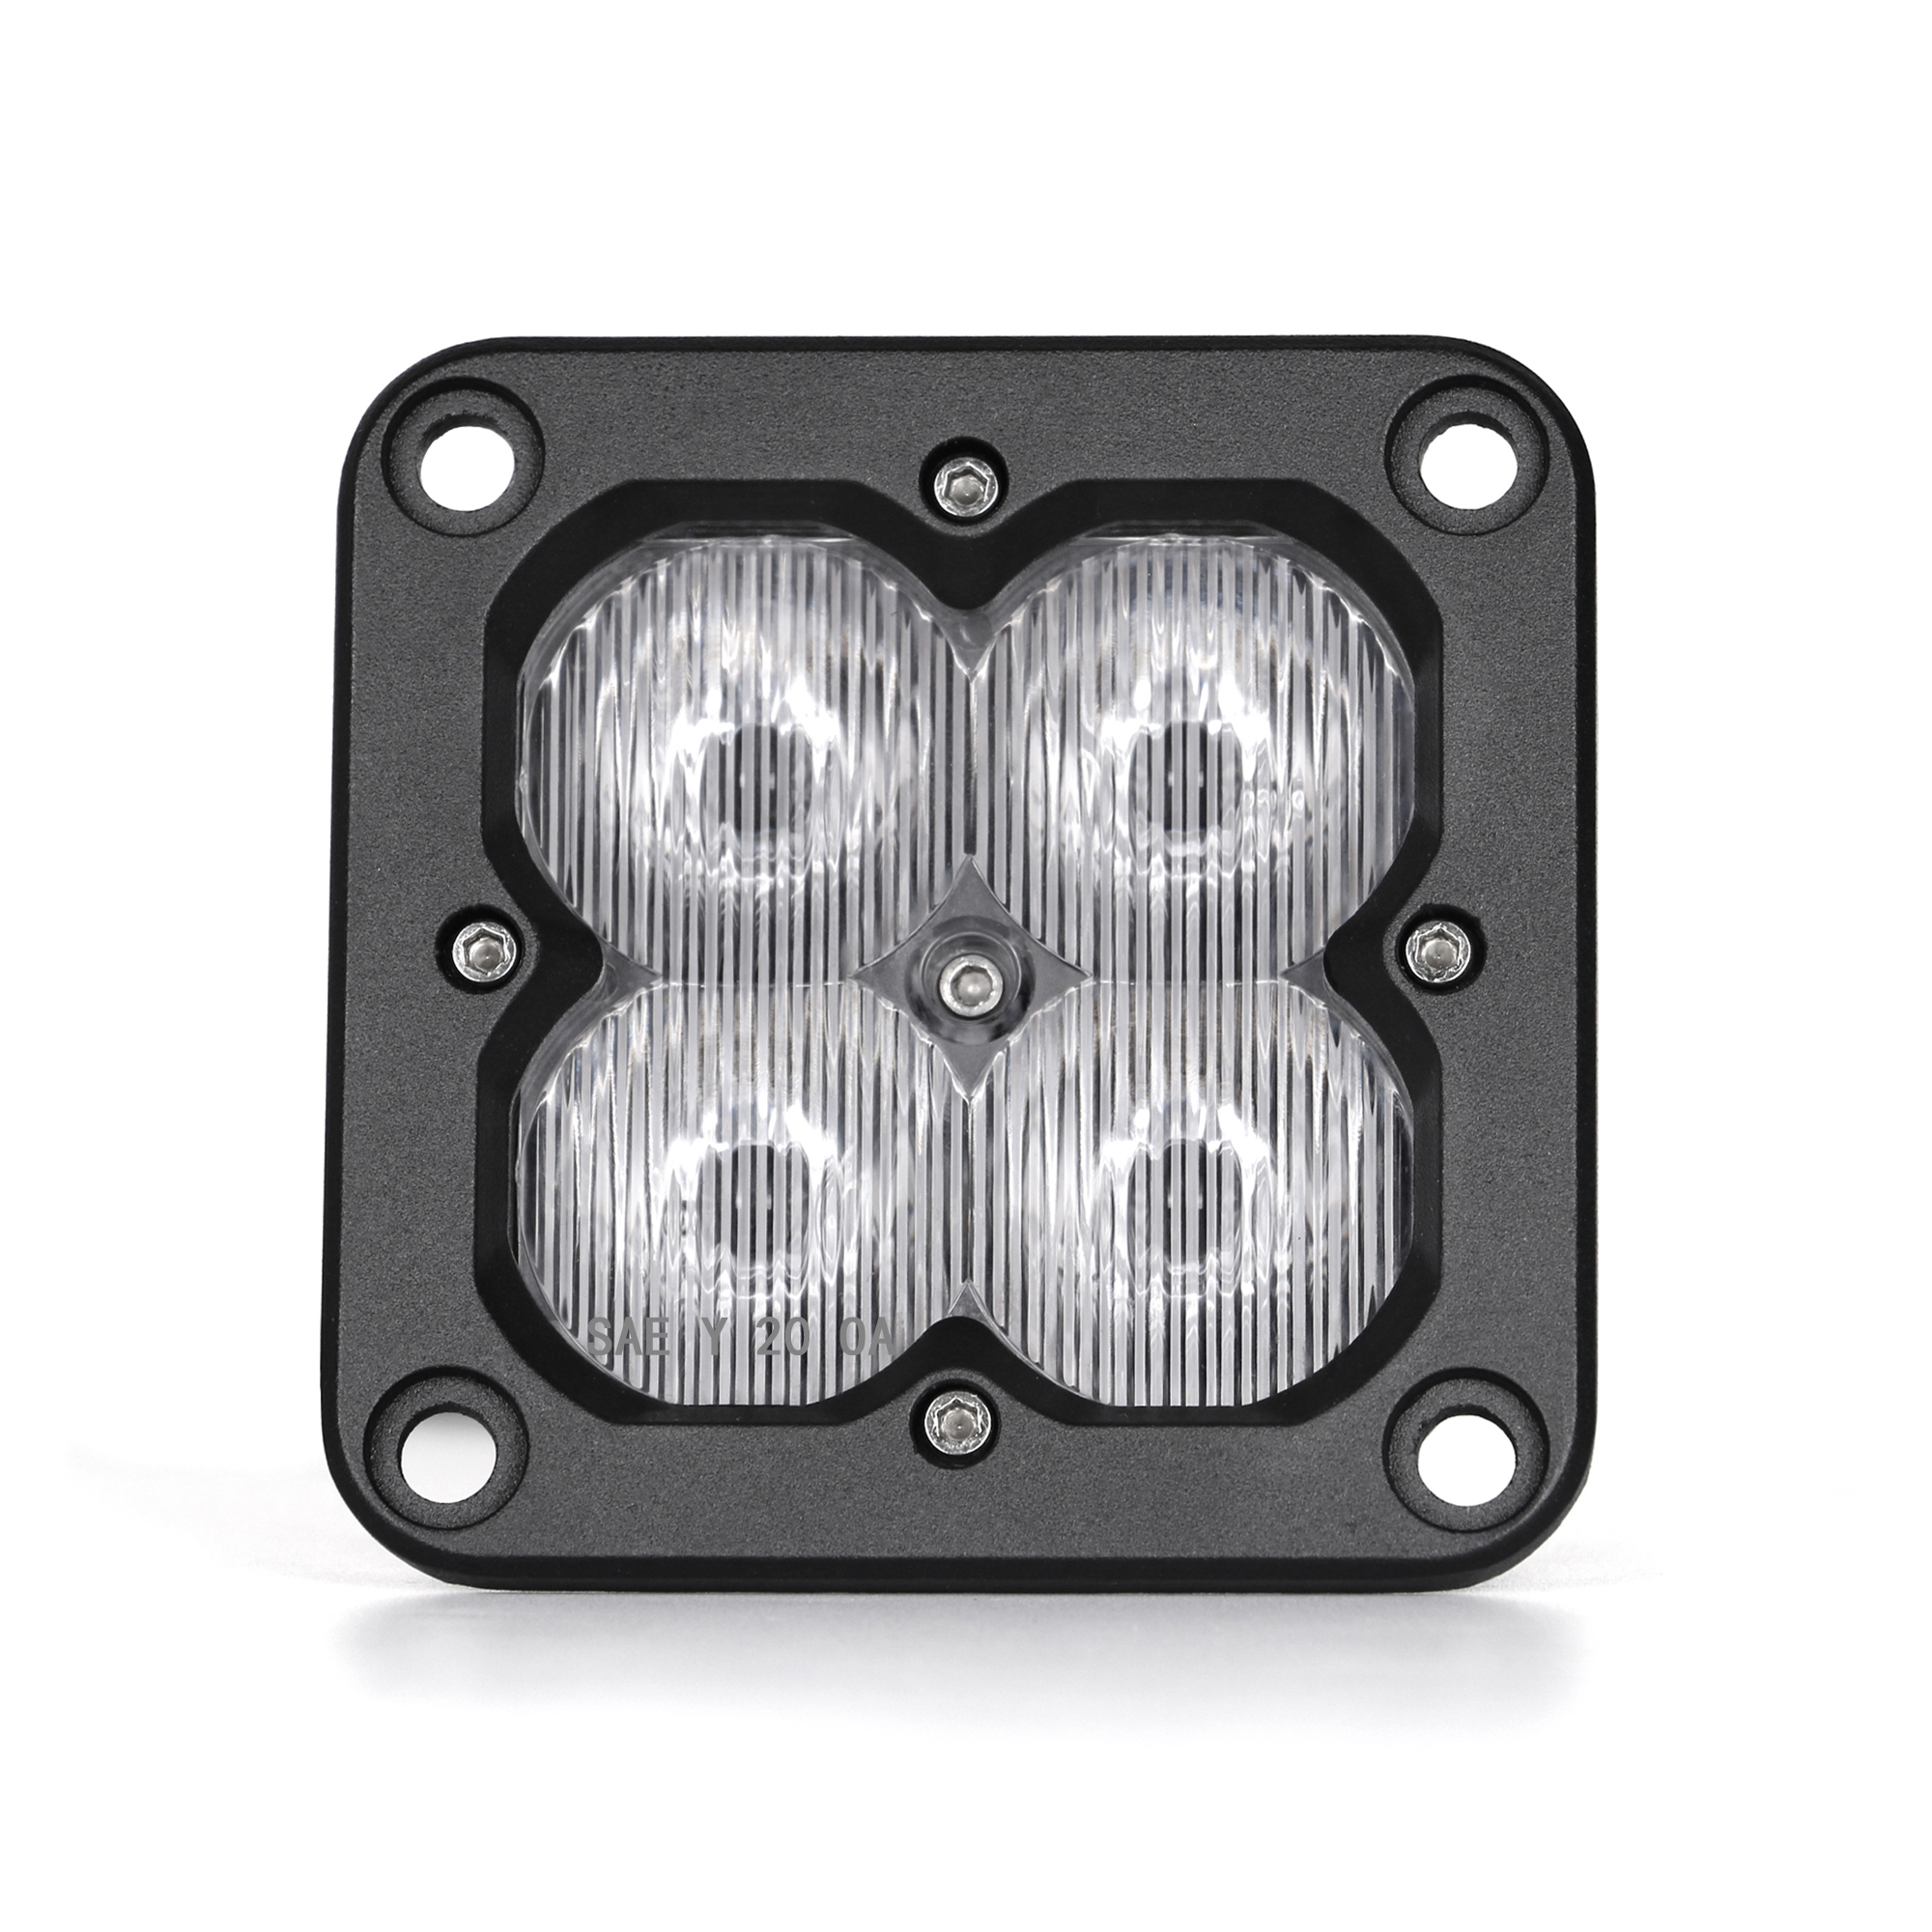 Hound Isolere Modstander Concept Series Pod, 3” Cube LED Pod Lights, Driving Beam, Flush Mount -  41122 -